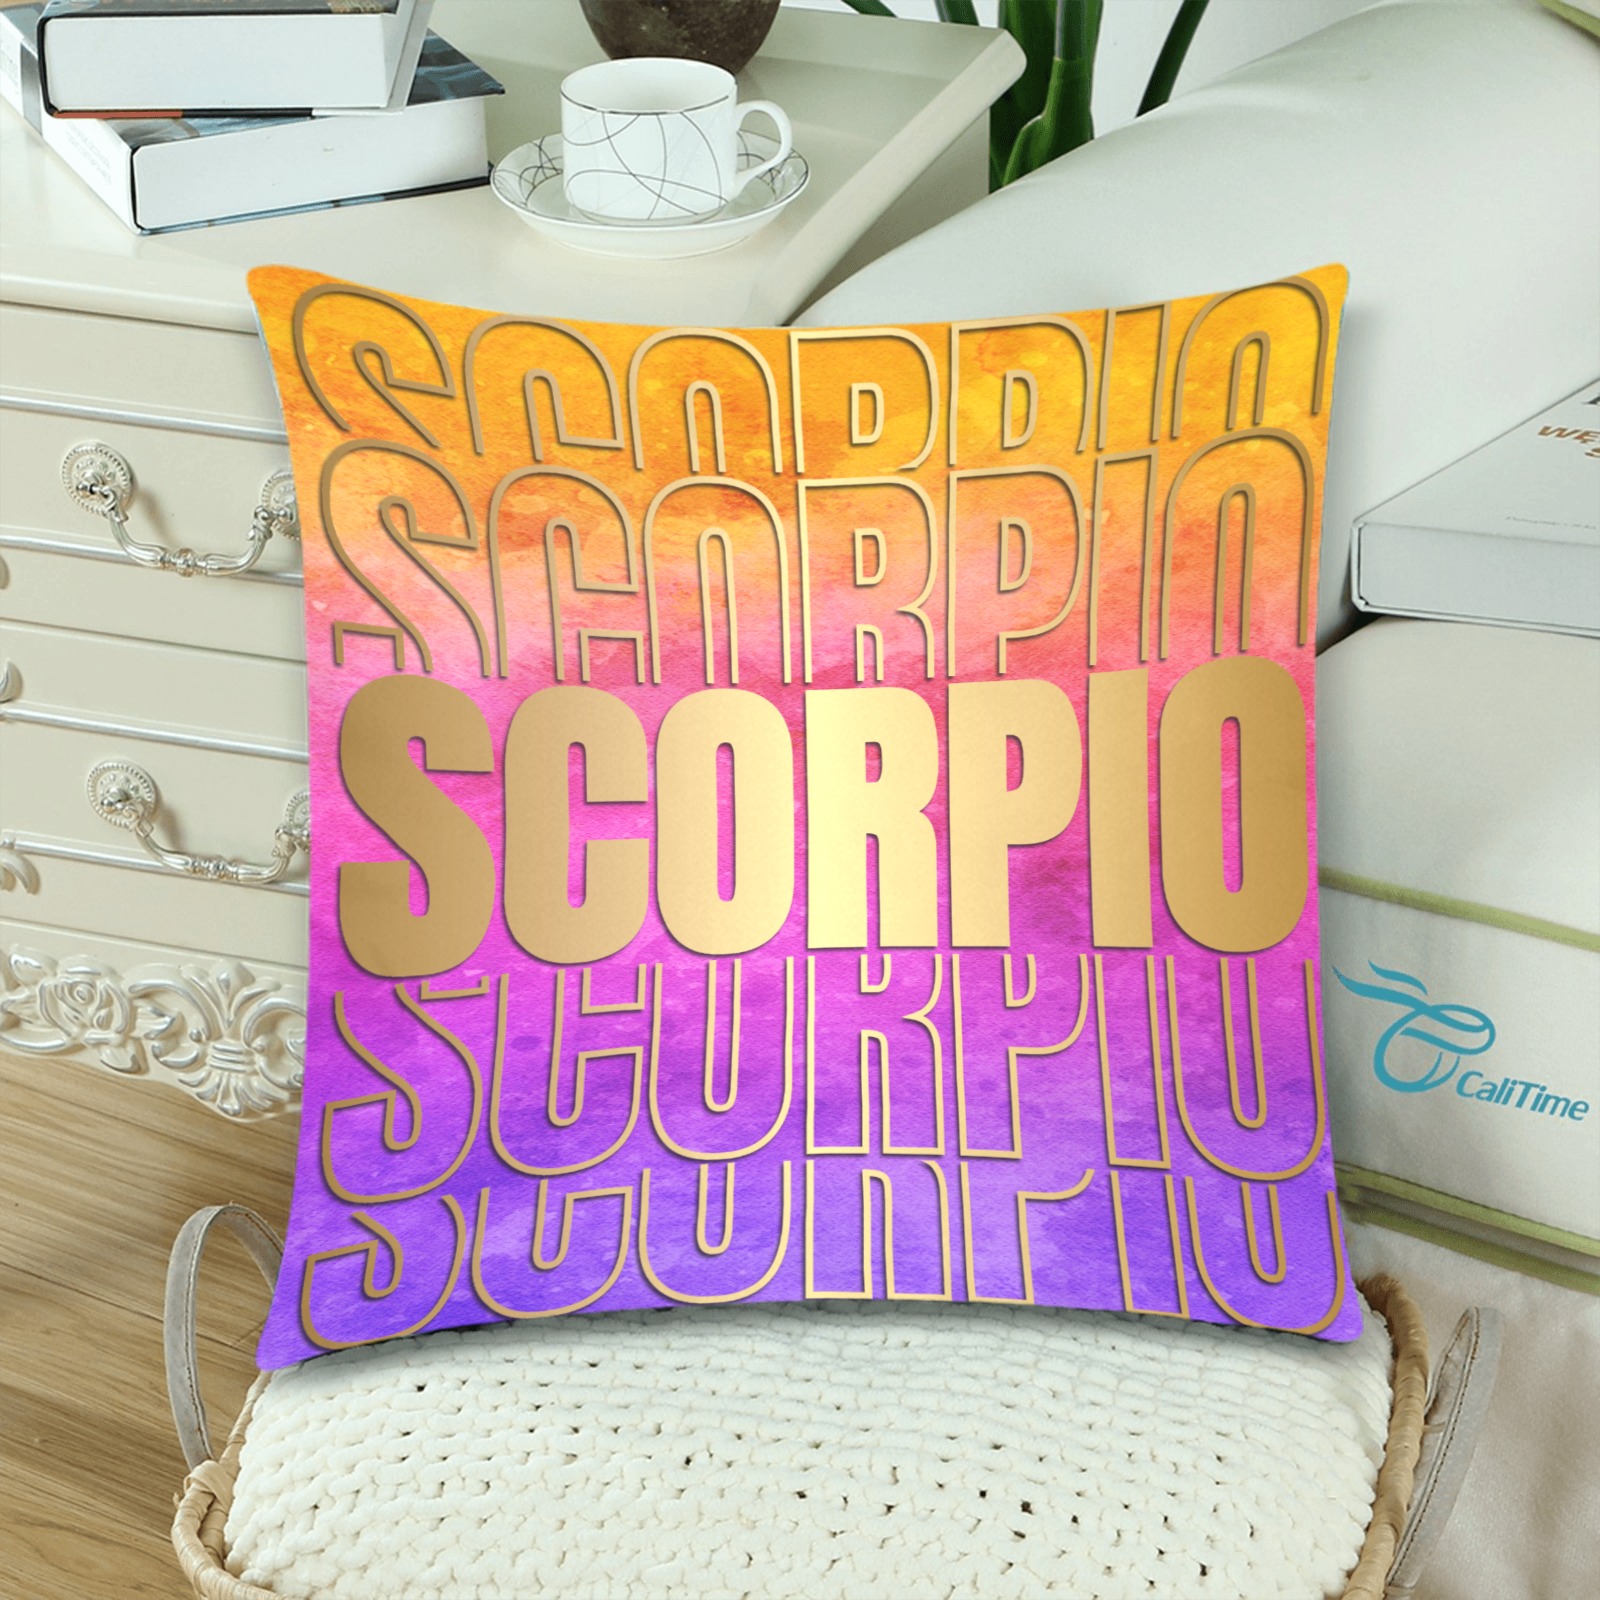 Zodiac Scorpio wo Image Custom Zippered Pillow Cases 18"x 18" (Twin Sides) (Set of 2)